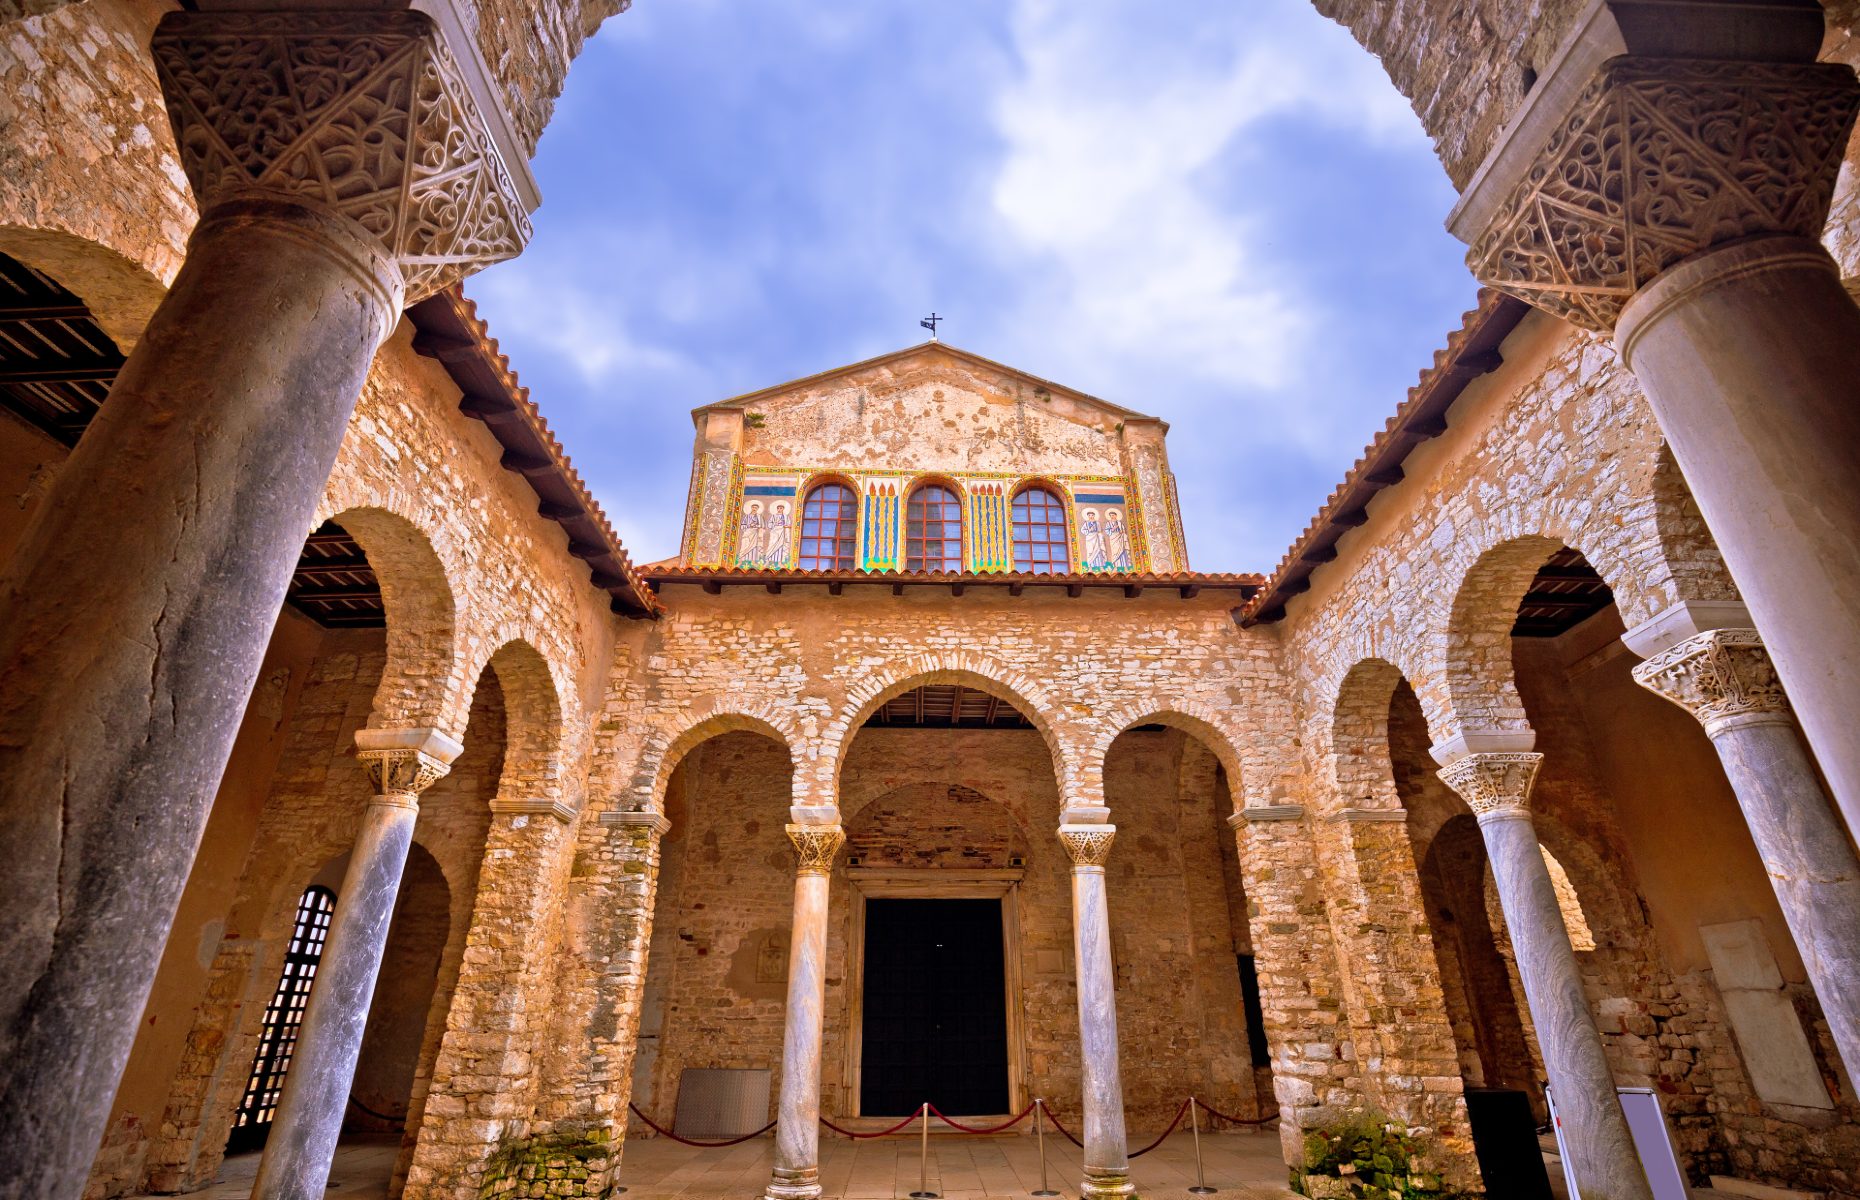 Euphrasian Basilica in Porec (Image: xbrchx/Shutterstock)